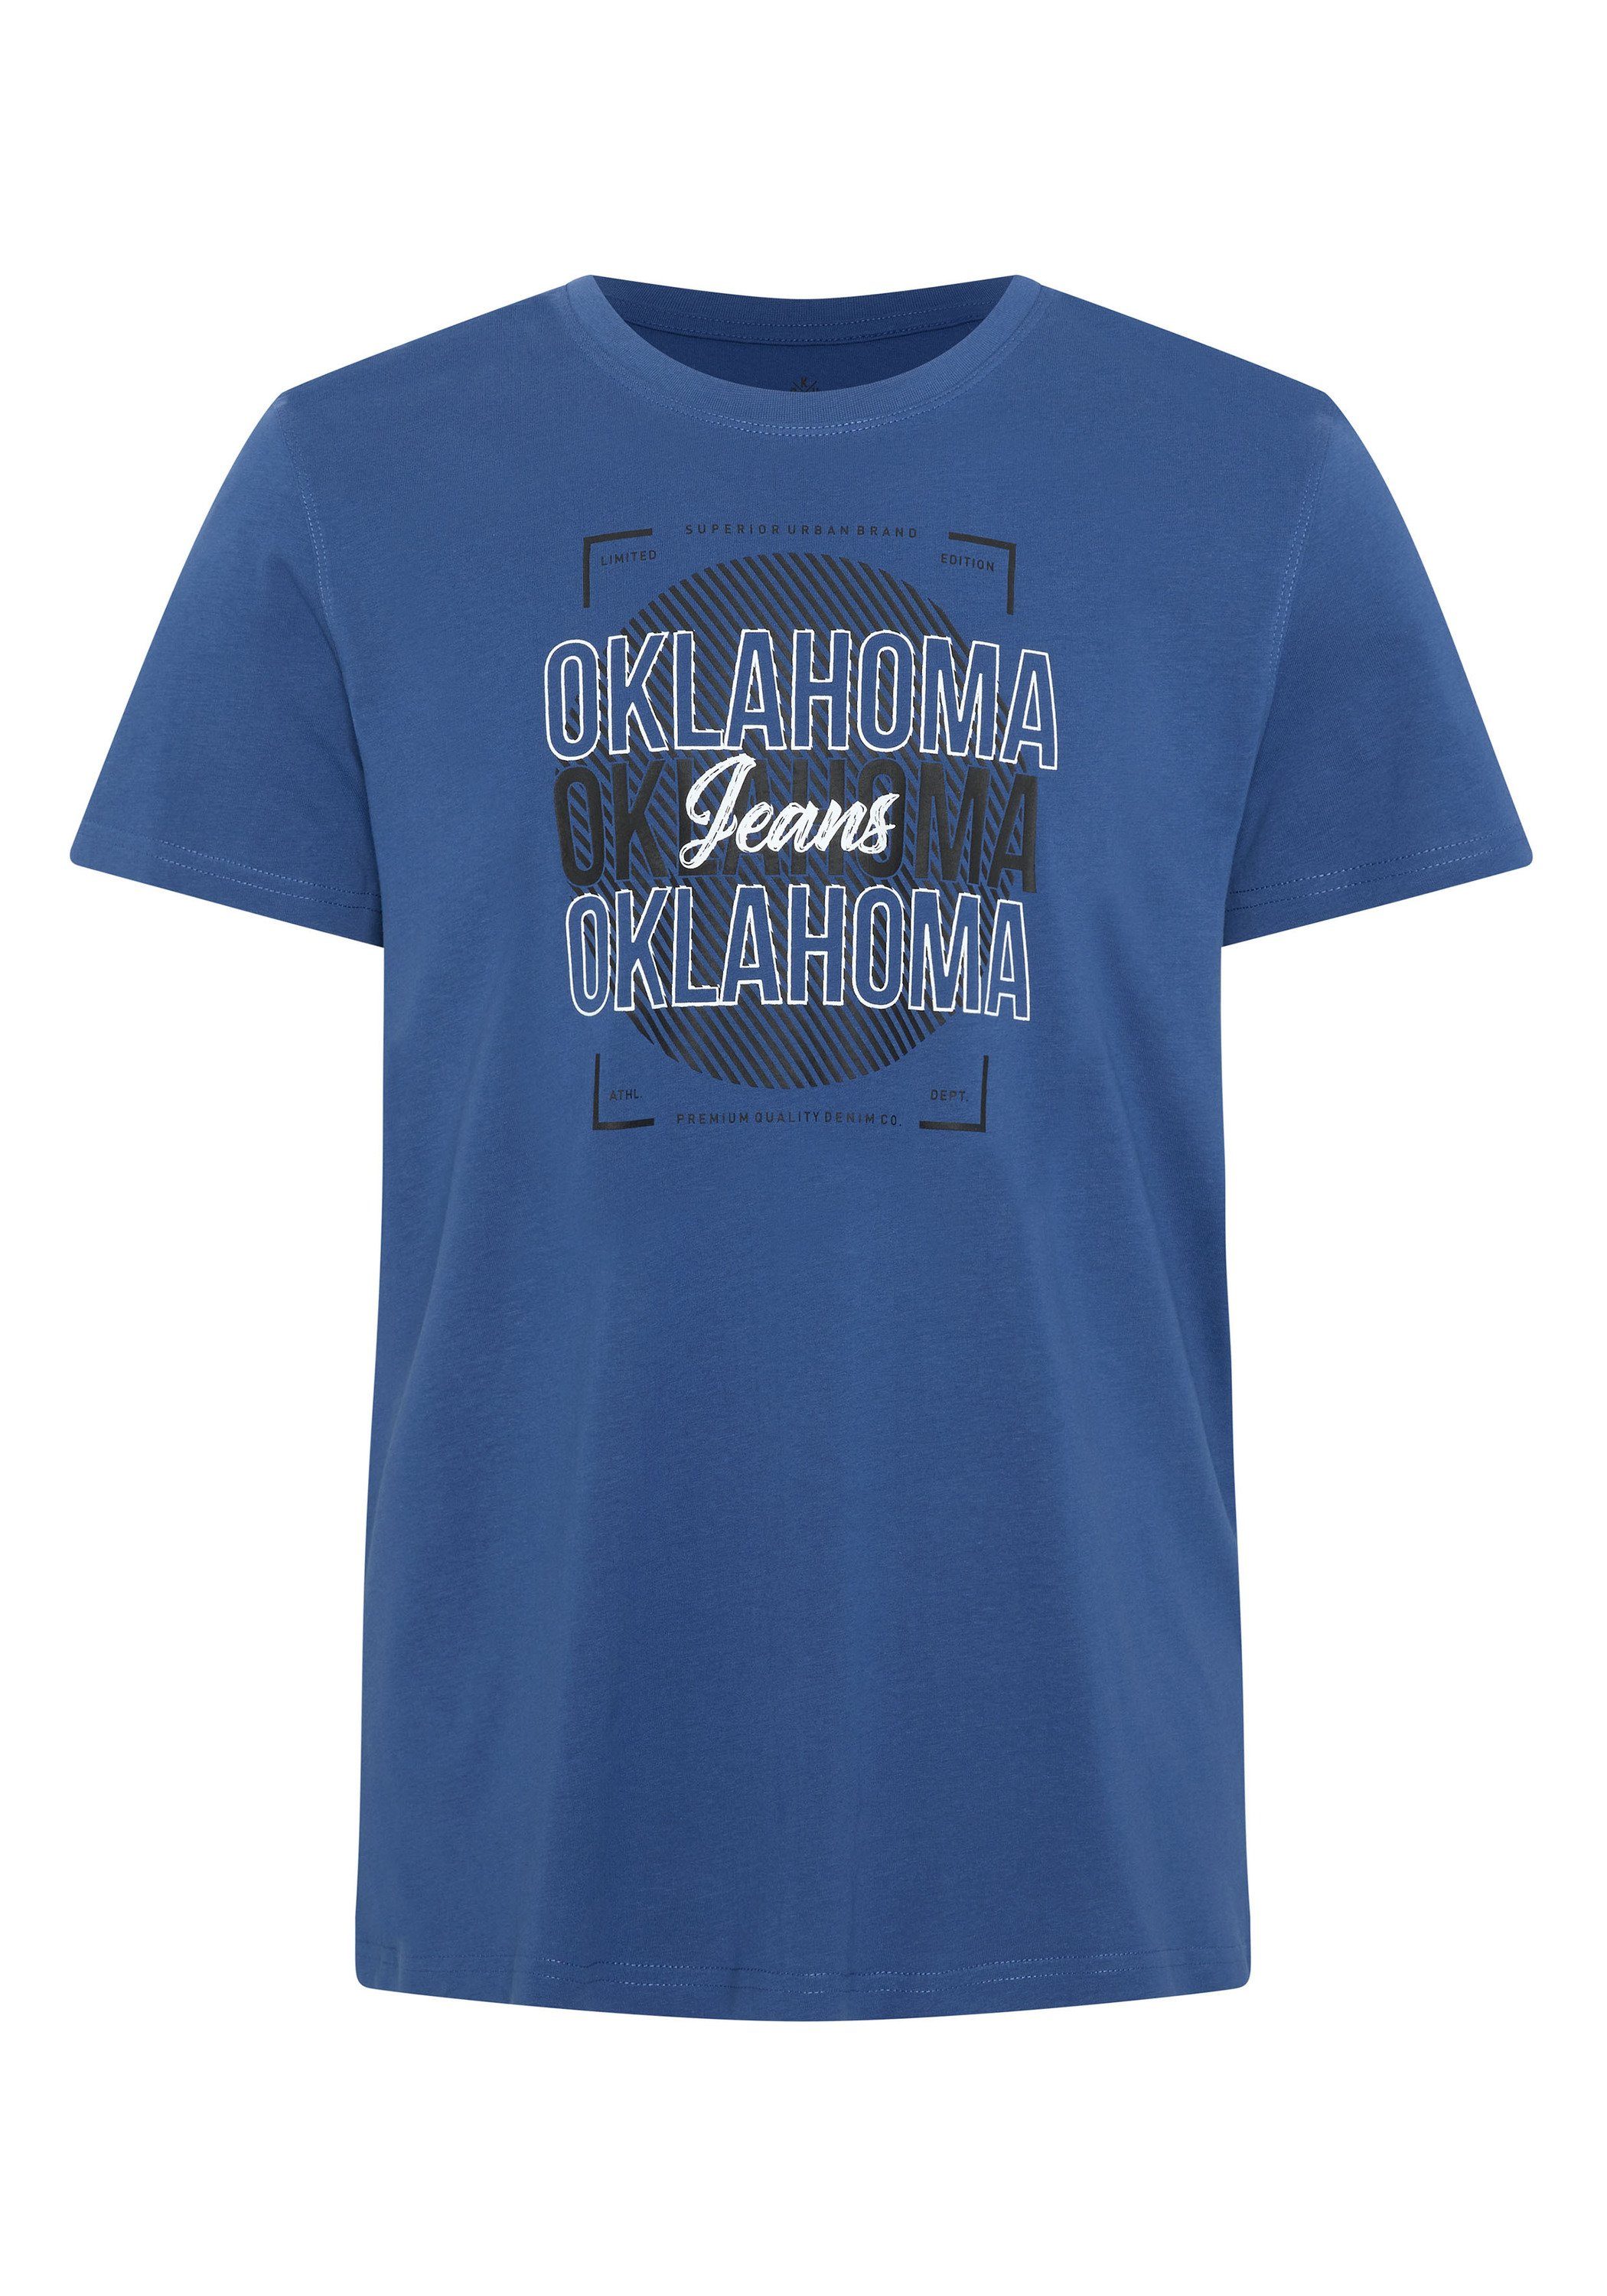 Oklahoma Jeans Print-Shirt im neuen Label-Look 19-4042 Set Sail